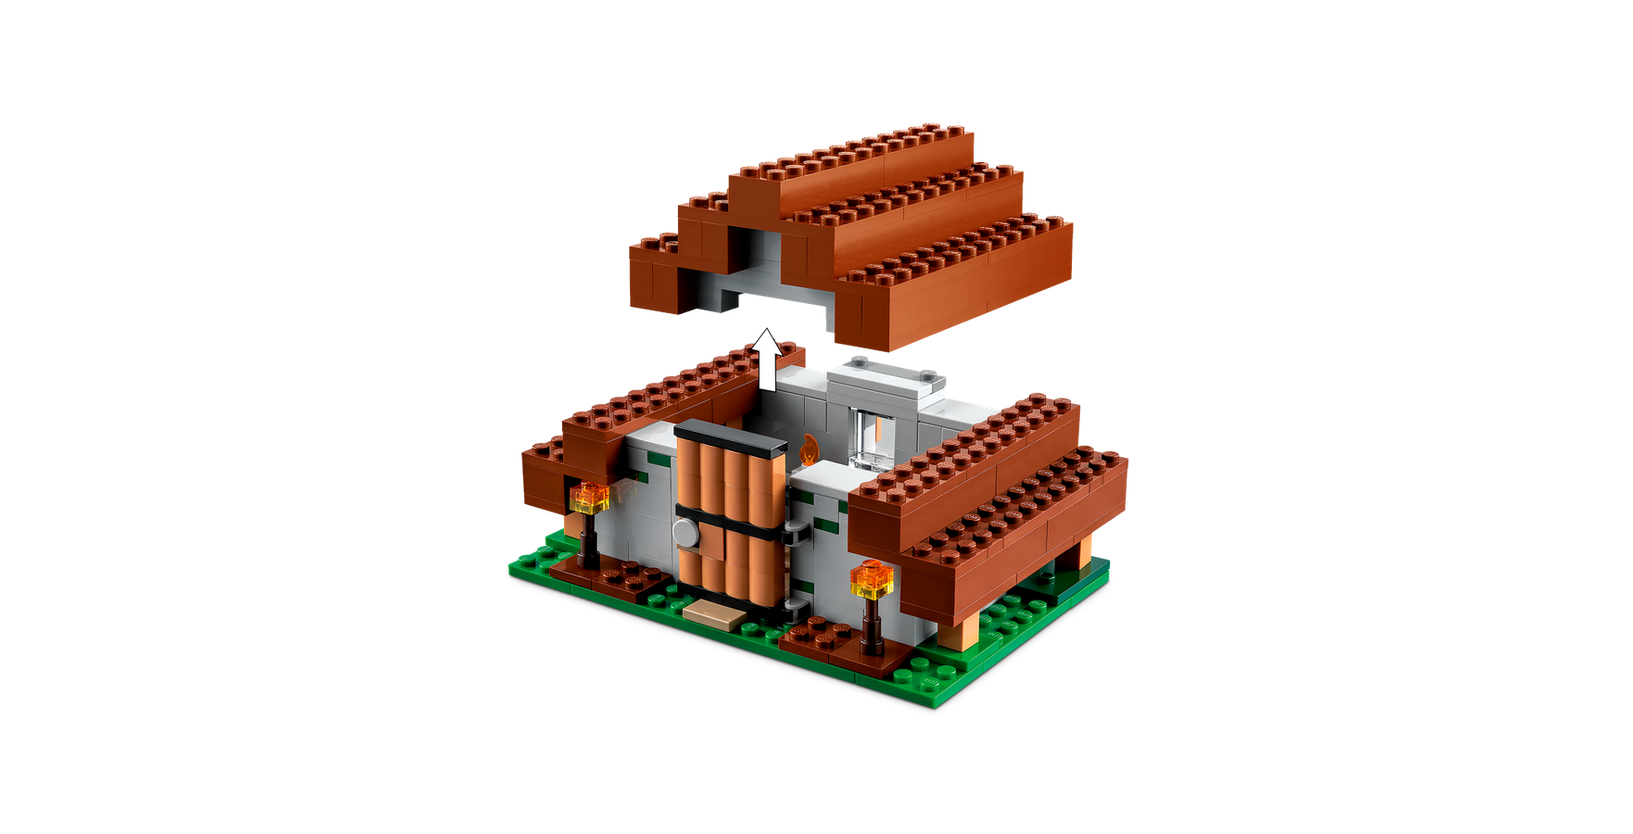 Lego Minecraft le Village Abandonné - 21190